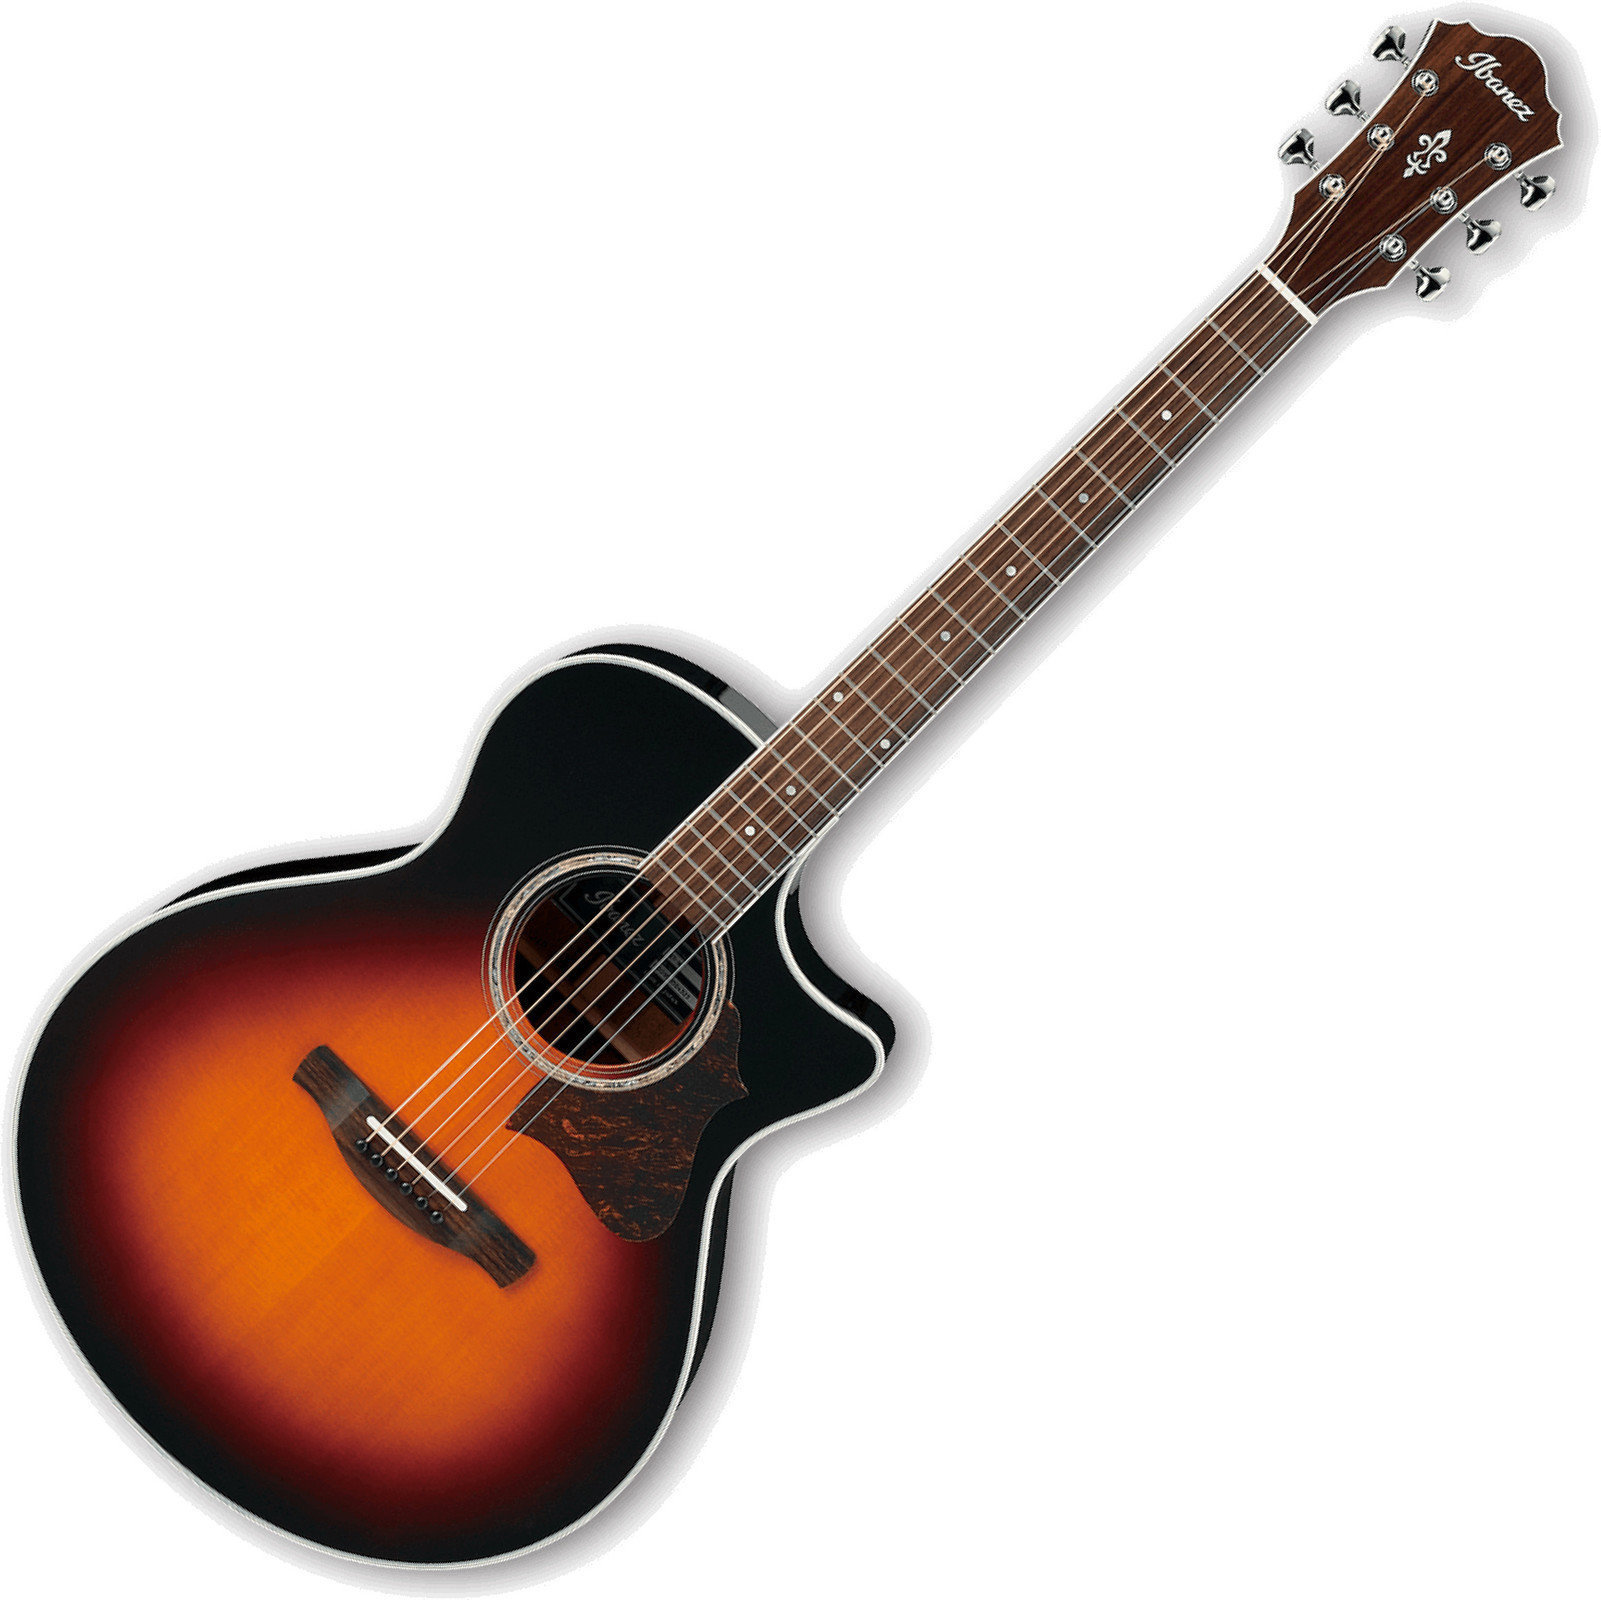 Jumbo elektro-akoestische gitaar Ibanez AE800 Antique Sunburst High Gloss